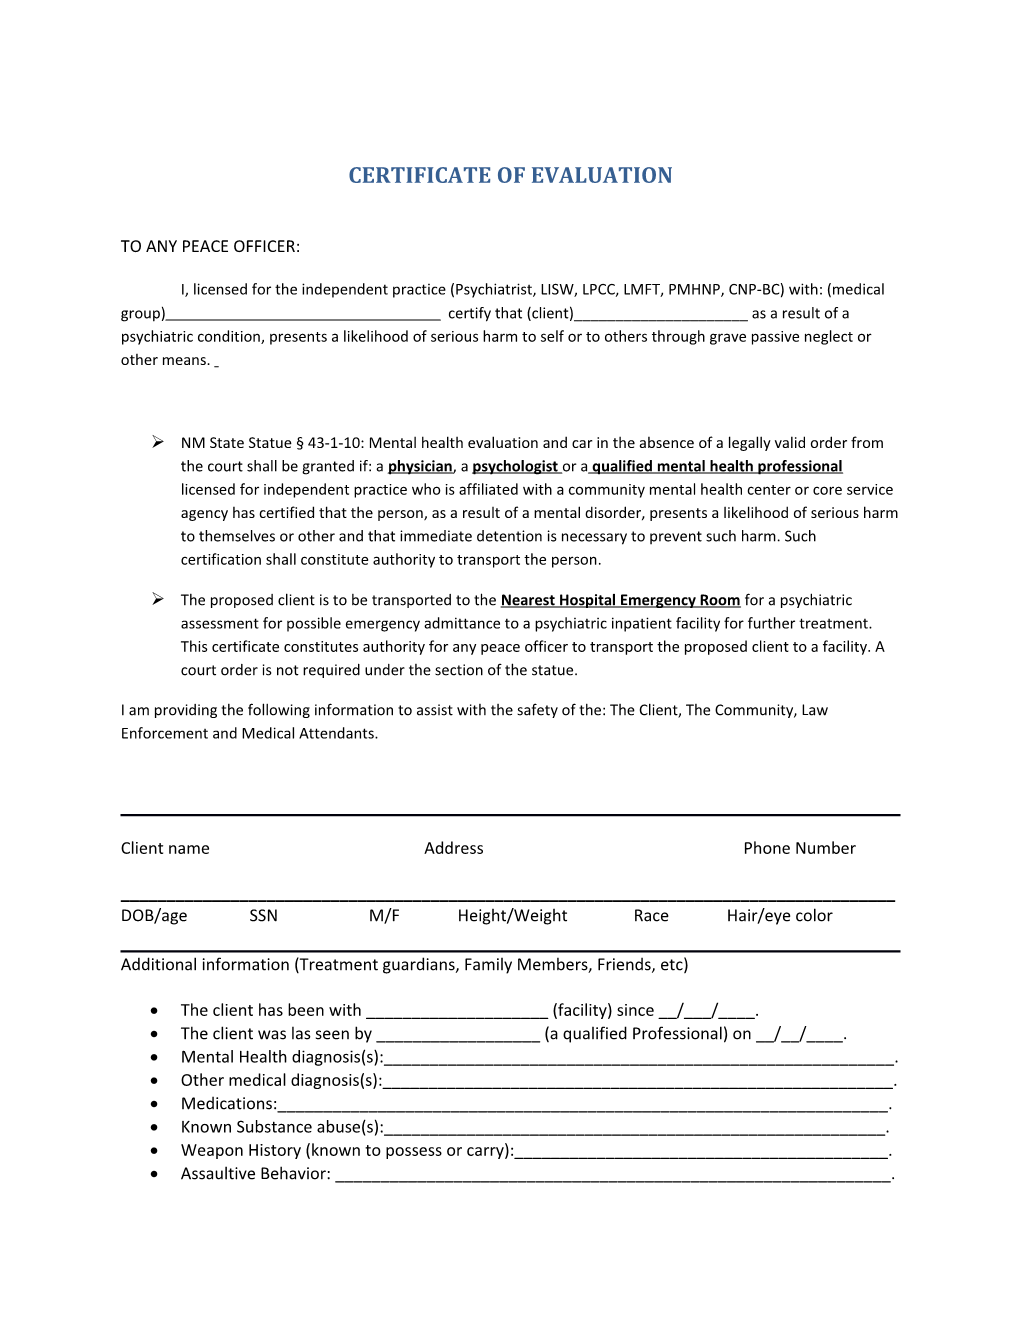 Certificate of Evaluation